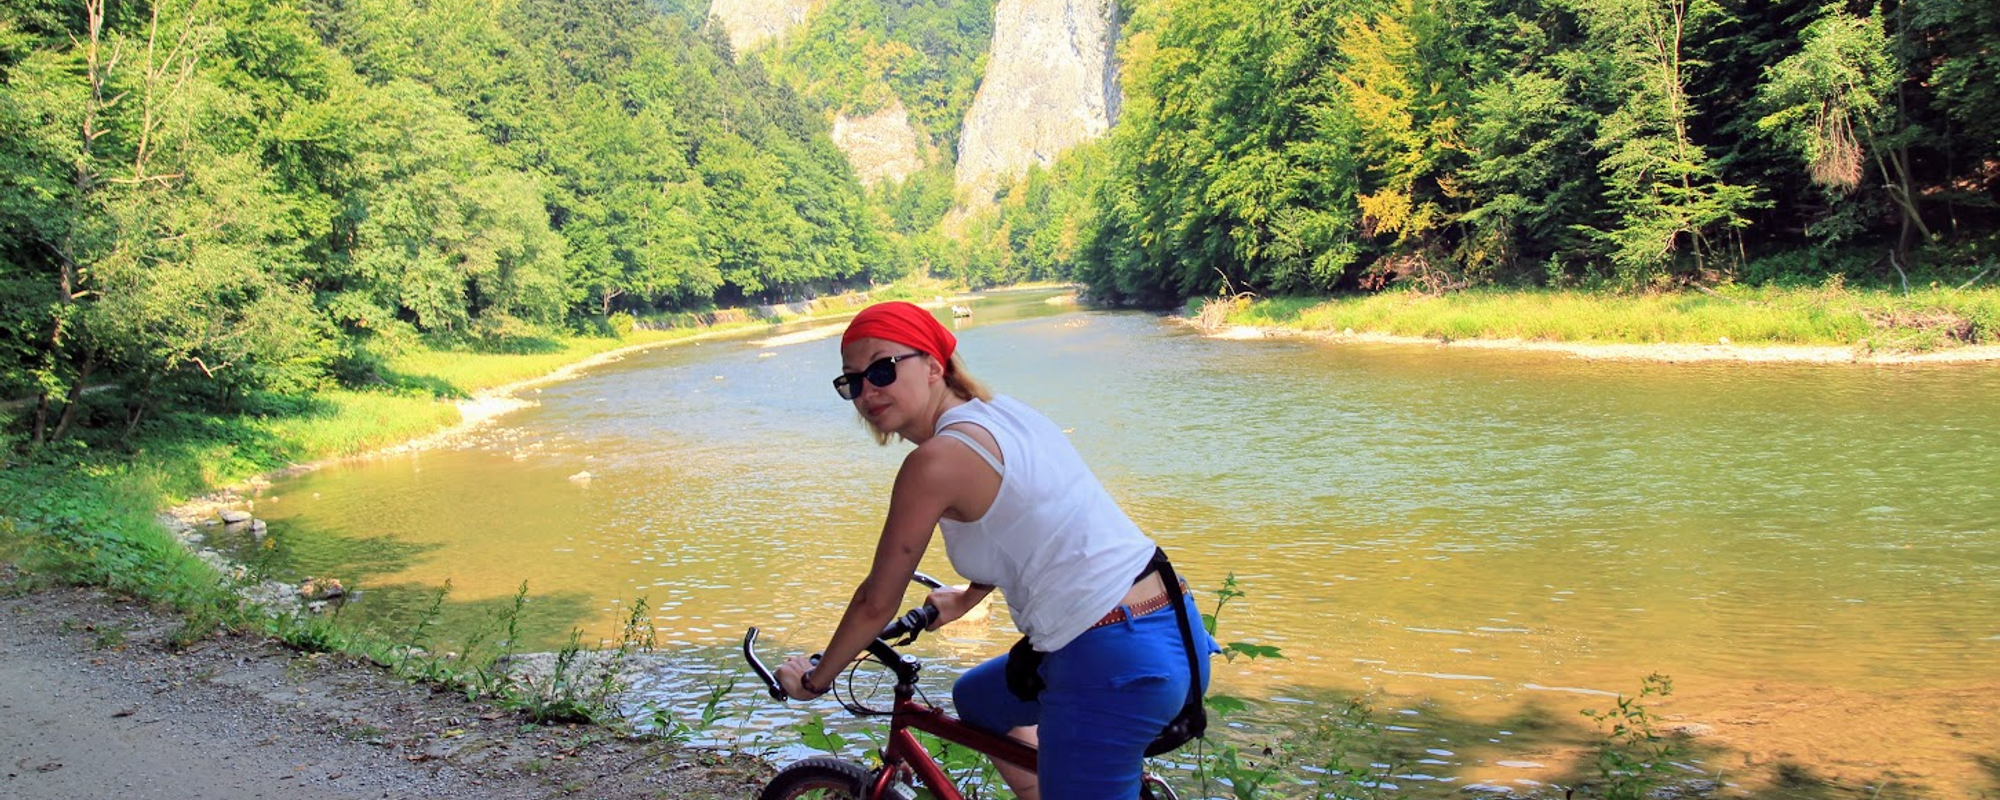 Rowerem w Pieninach [PL] /Biking in the Pieniny Mountains  [ENG]